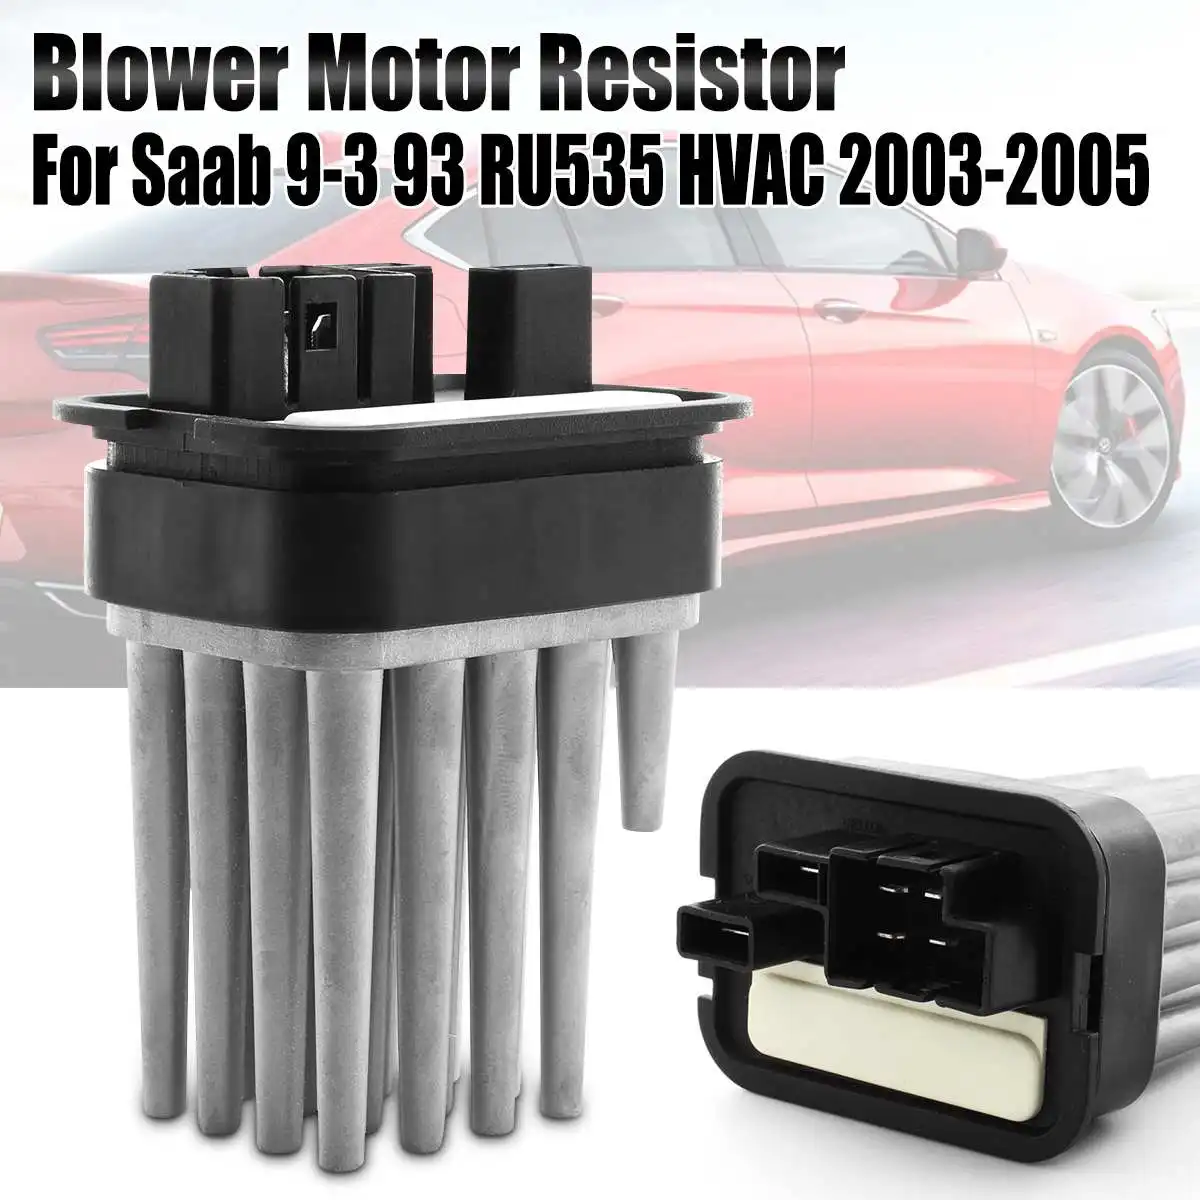 Air Conditioning Heater Fan HVAC Blower Motor Resistor SCITOO Regulator fit 2003-2007 Saab 9-3 